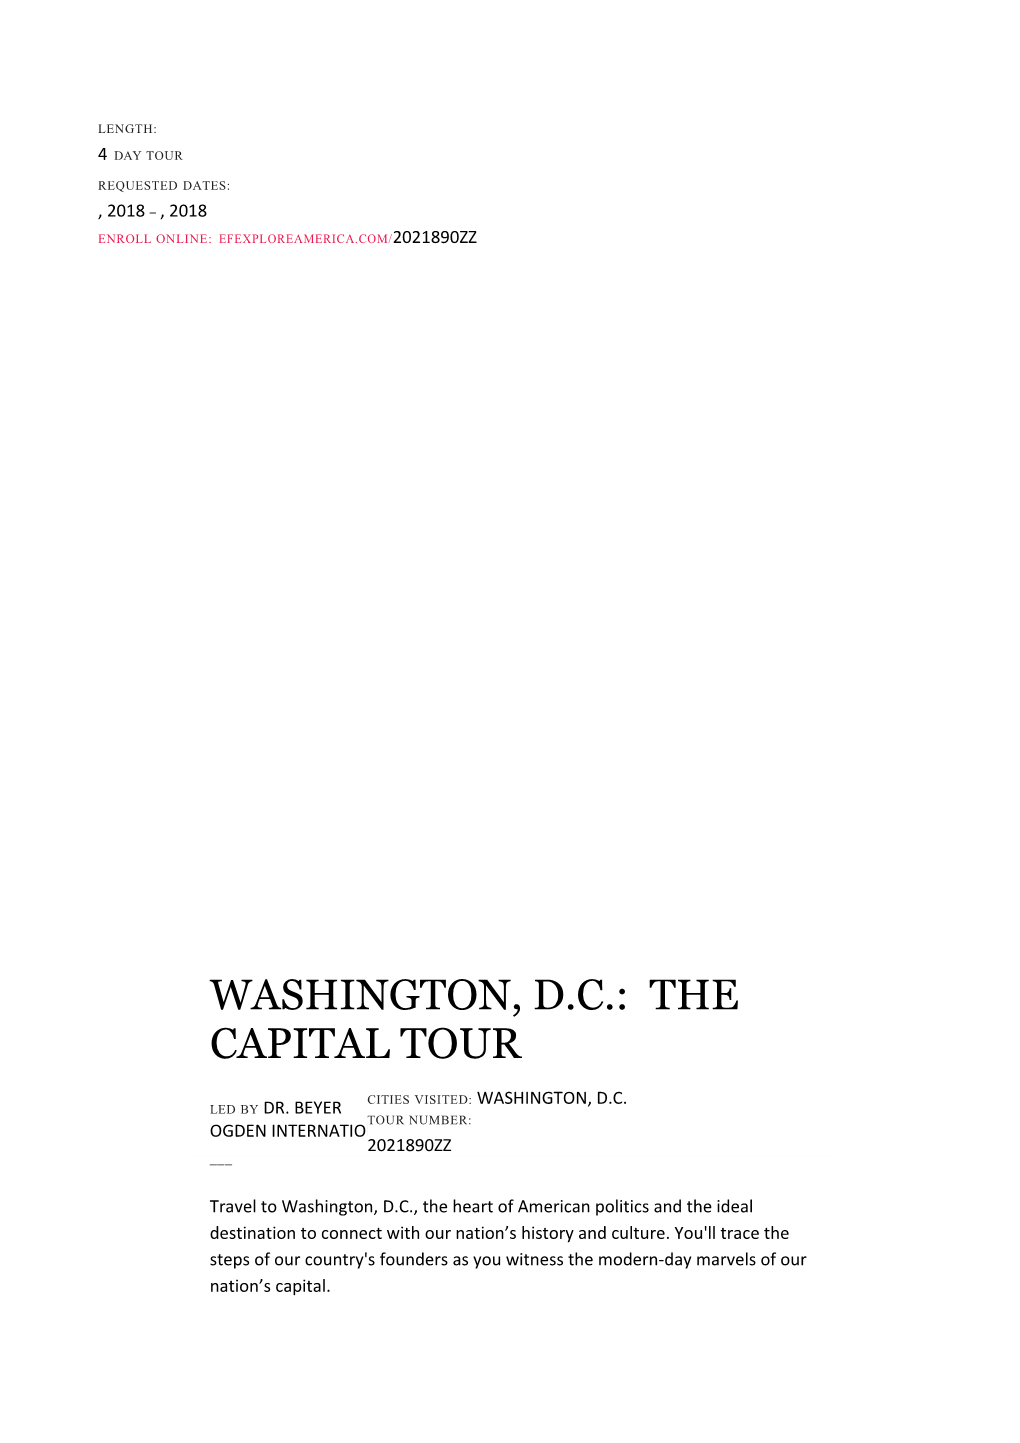 Washington, D.C.: the Capital Tour